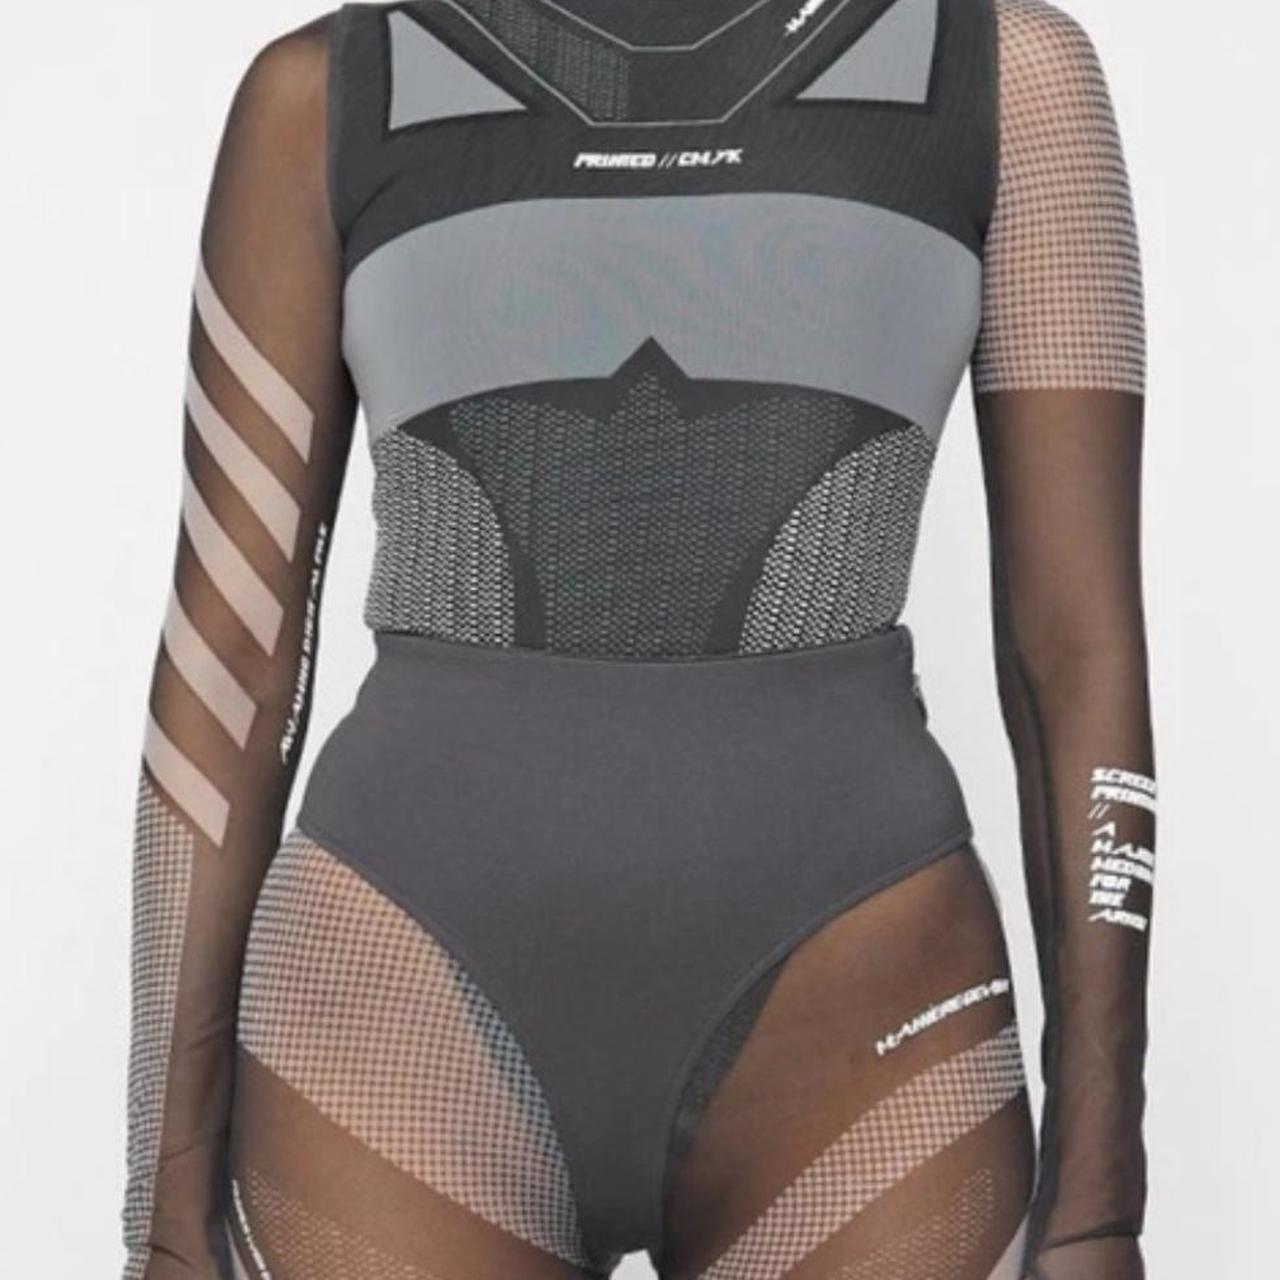 Money Print Bodysuit Details : A bodysuit / onesie - Depop